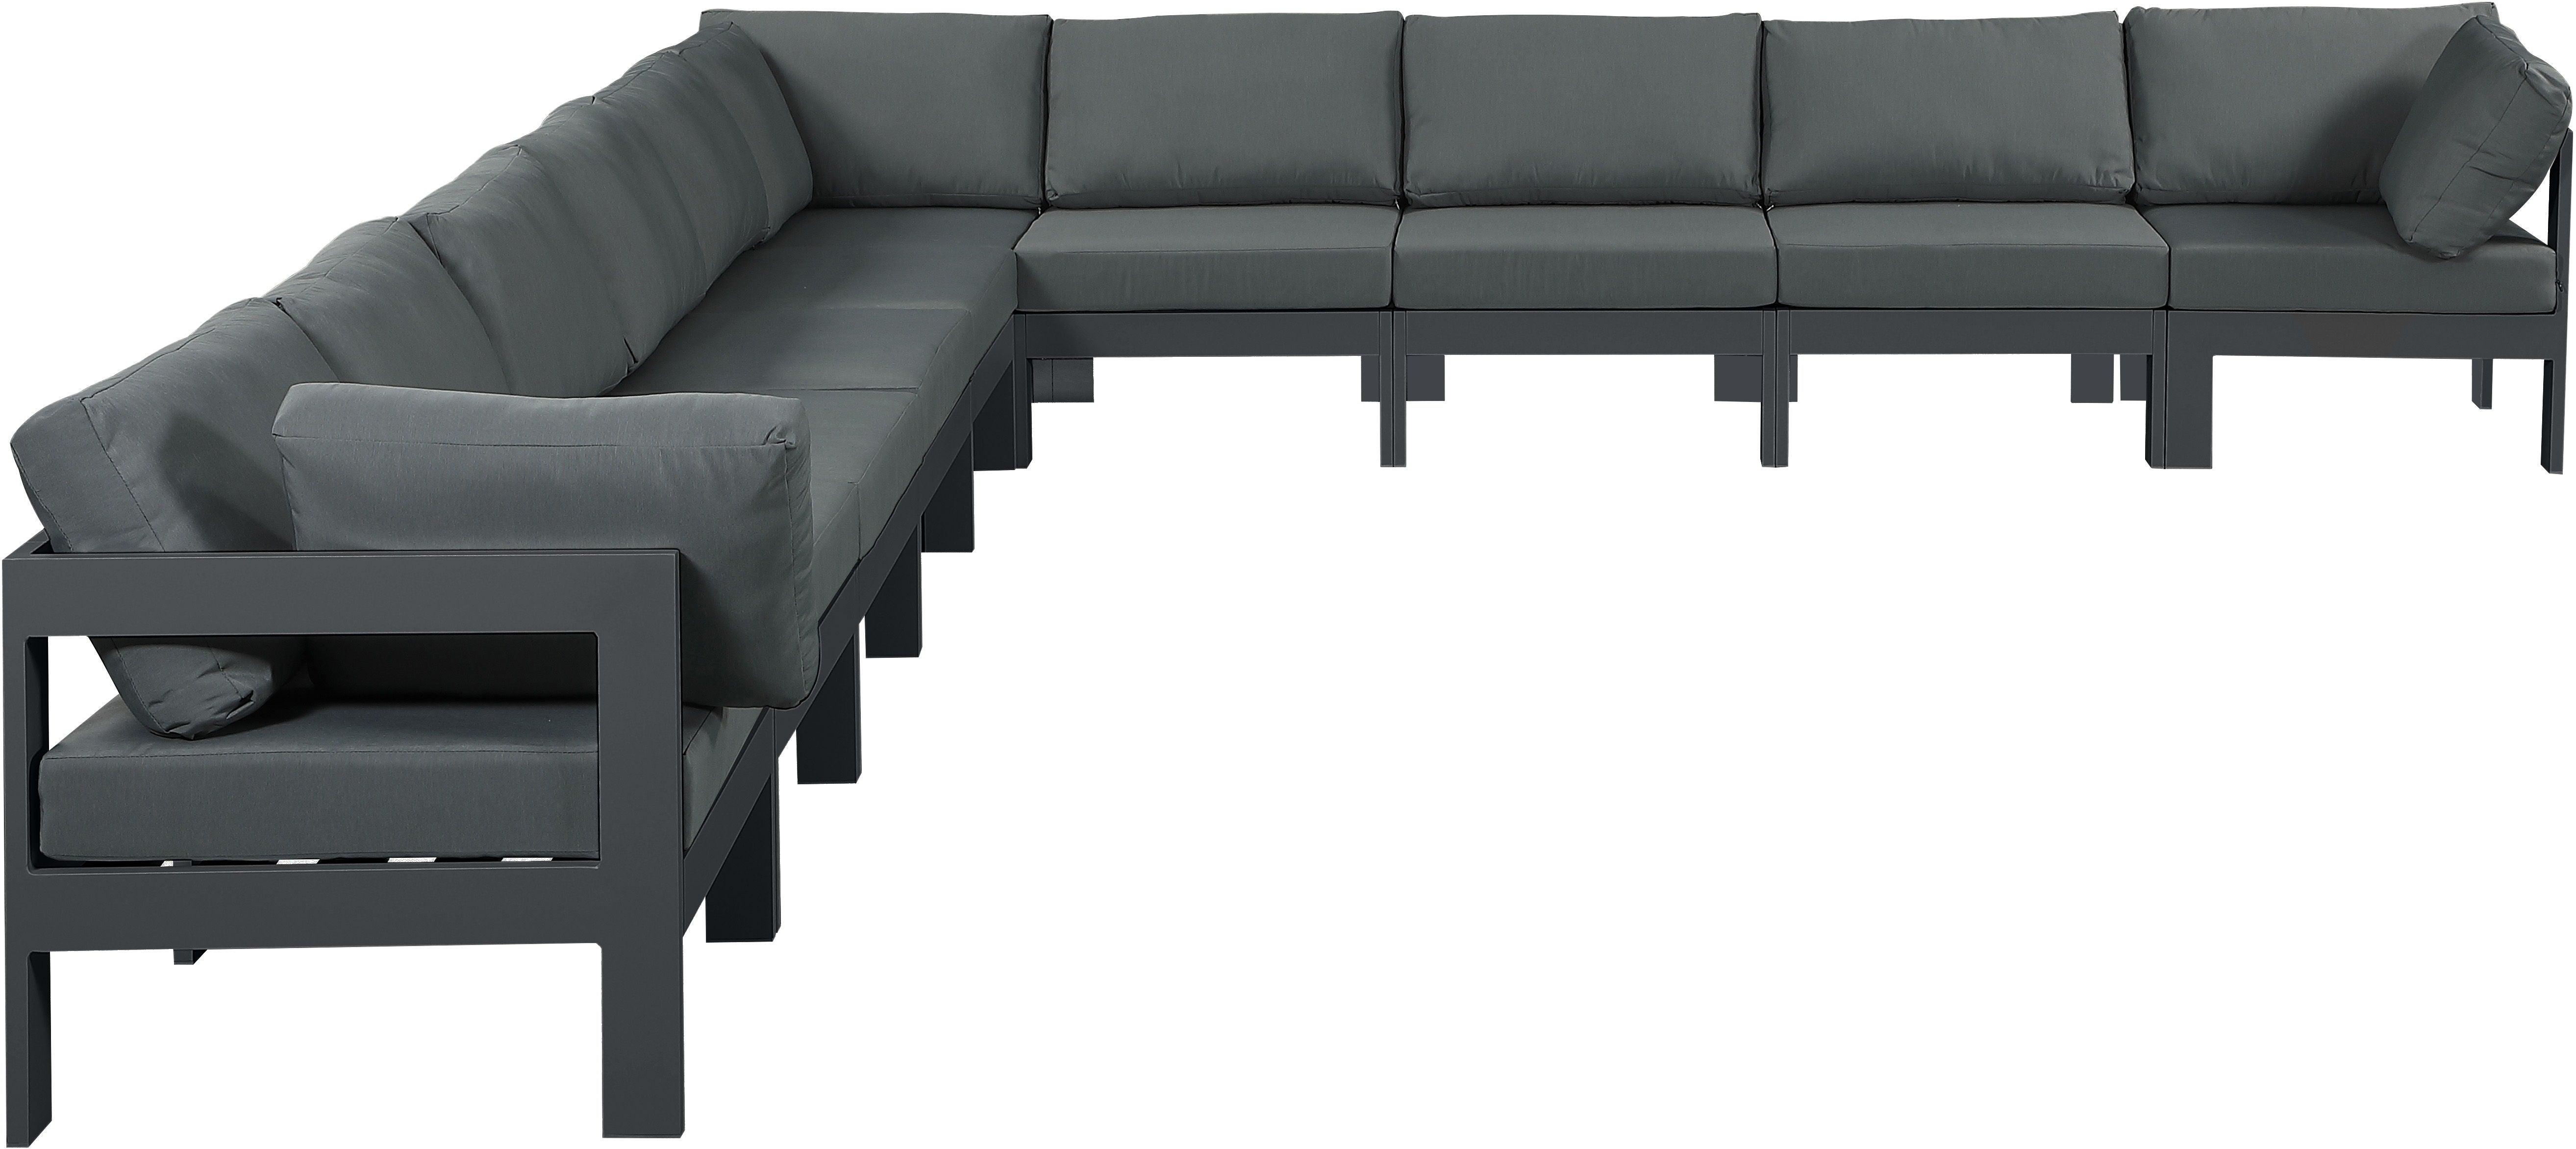 Meridian Furniture - Nizuc - Outdoor Patio Modular Sectional 10 Piece - Grey - 5th Avenue Furniture